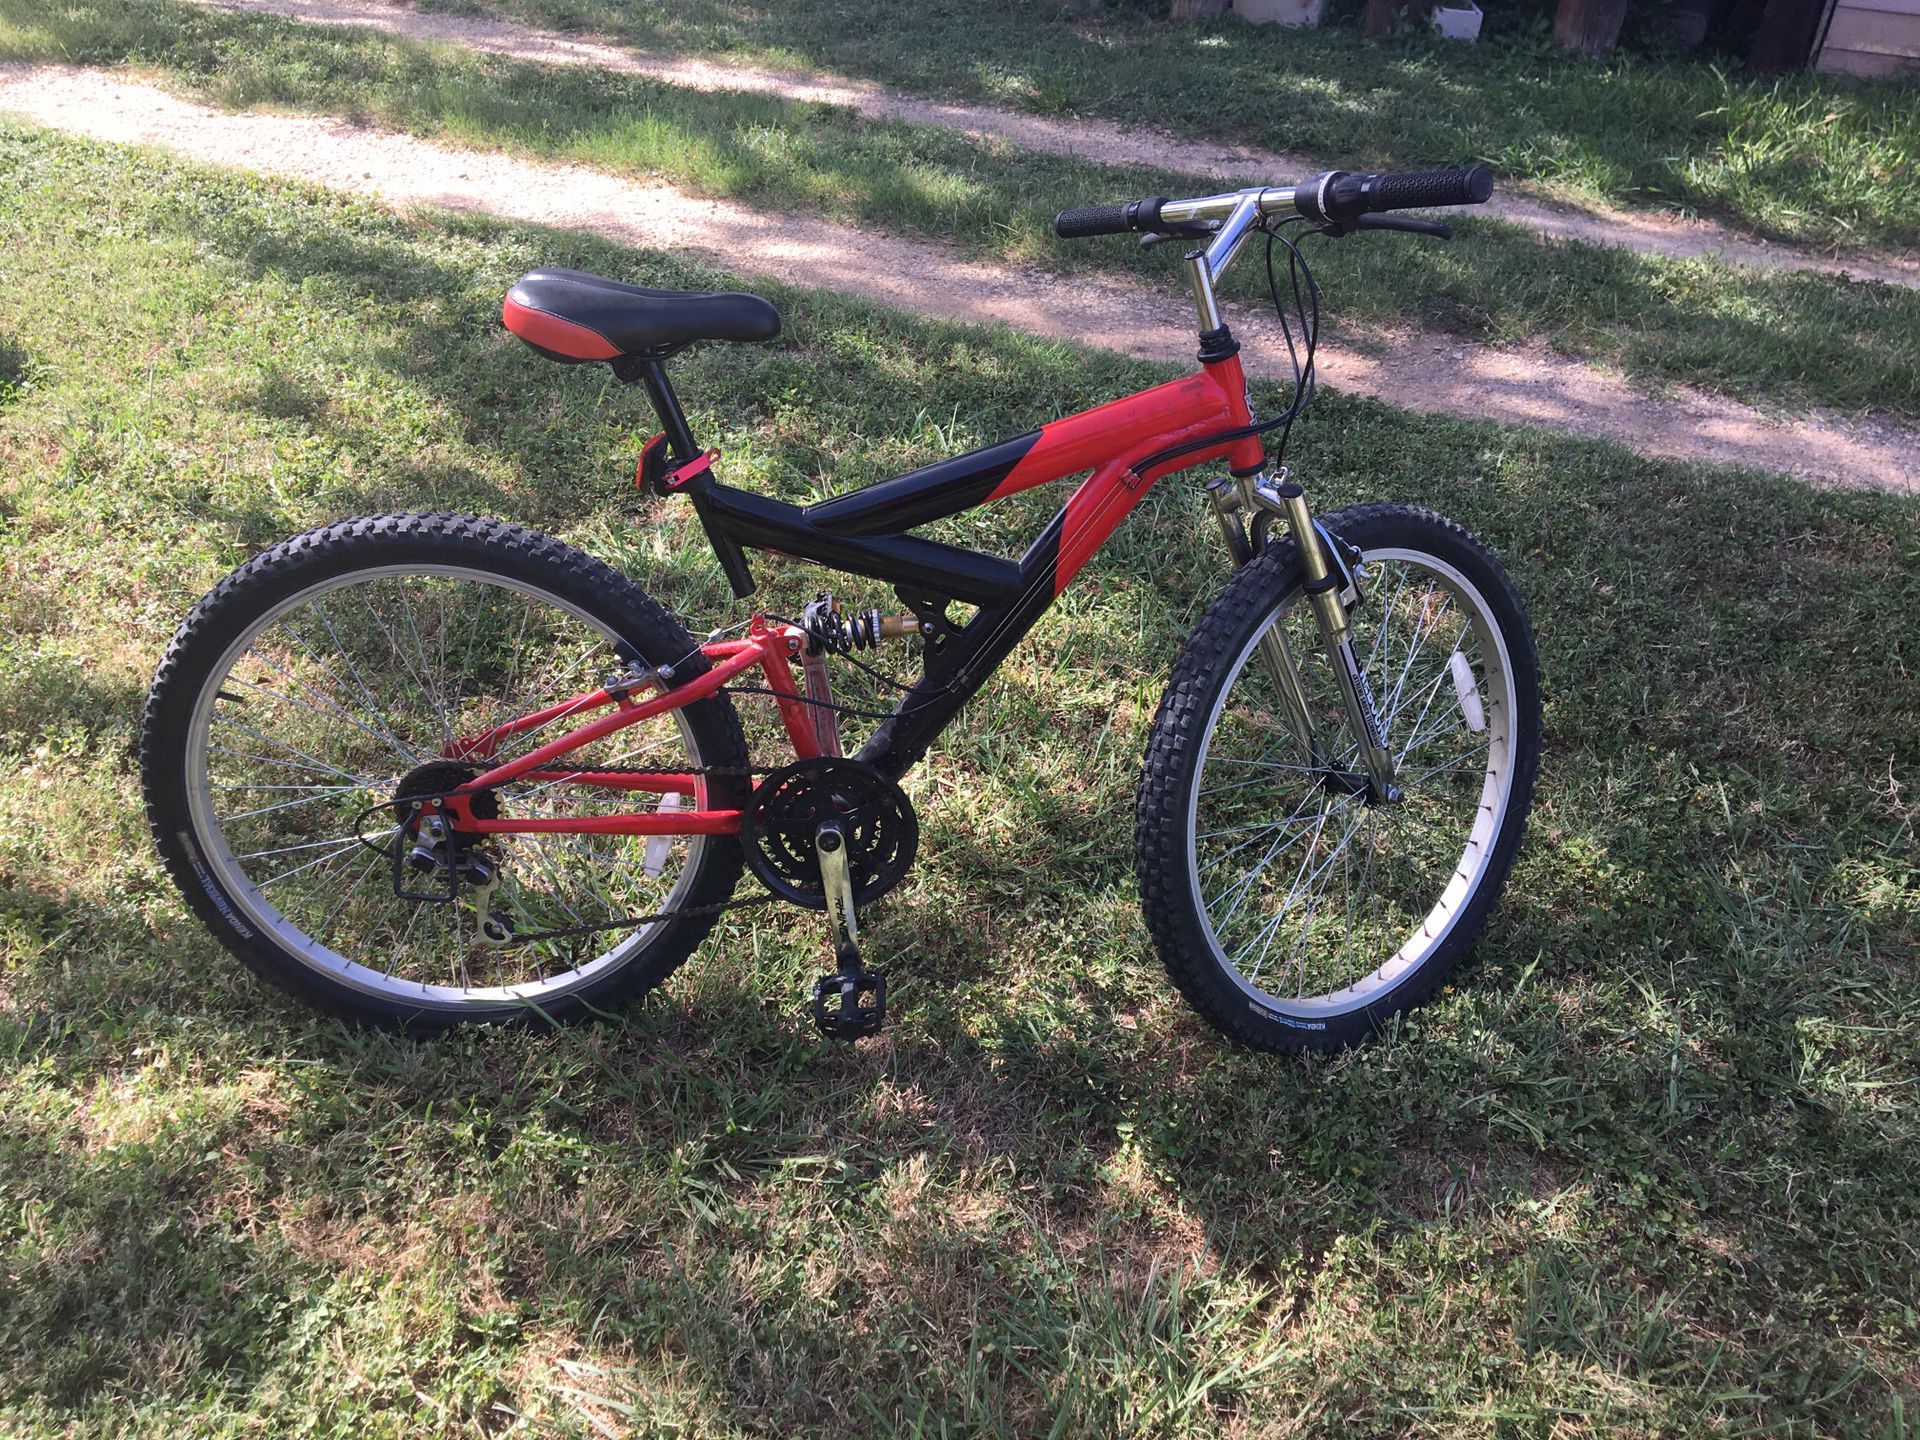 Mountain bike Rhino 26” $120 obo